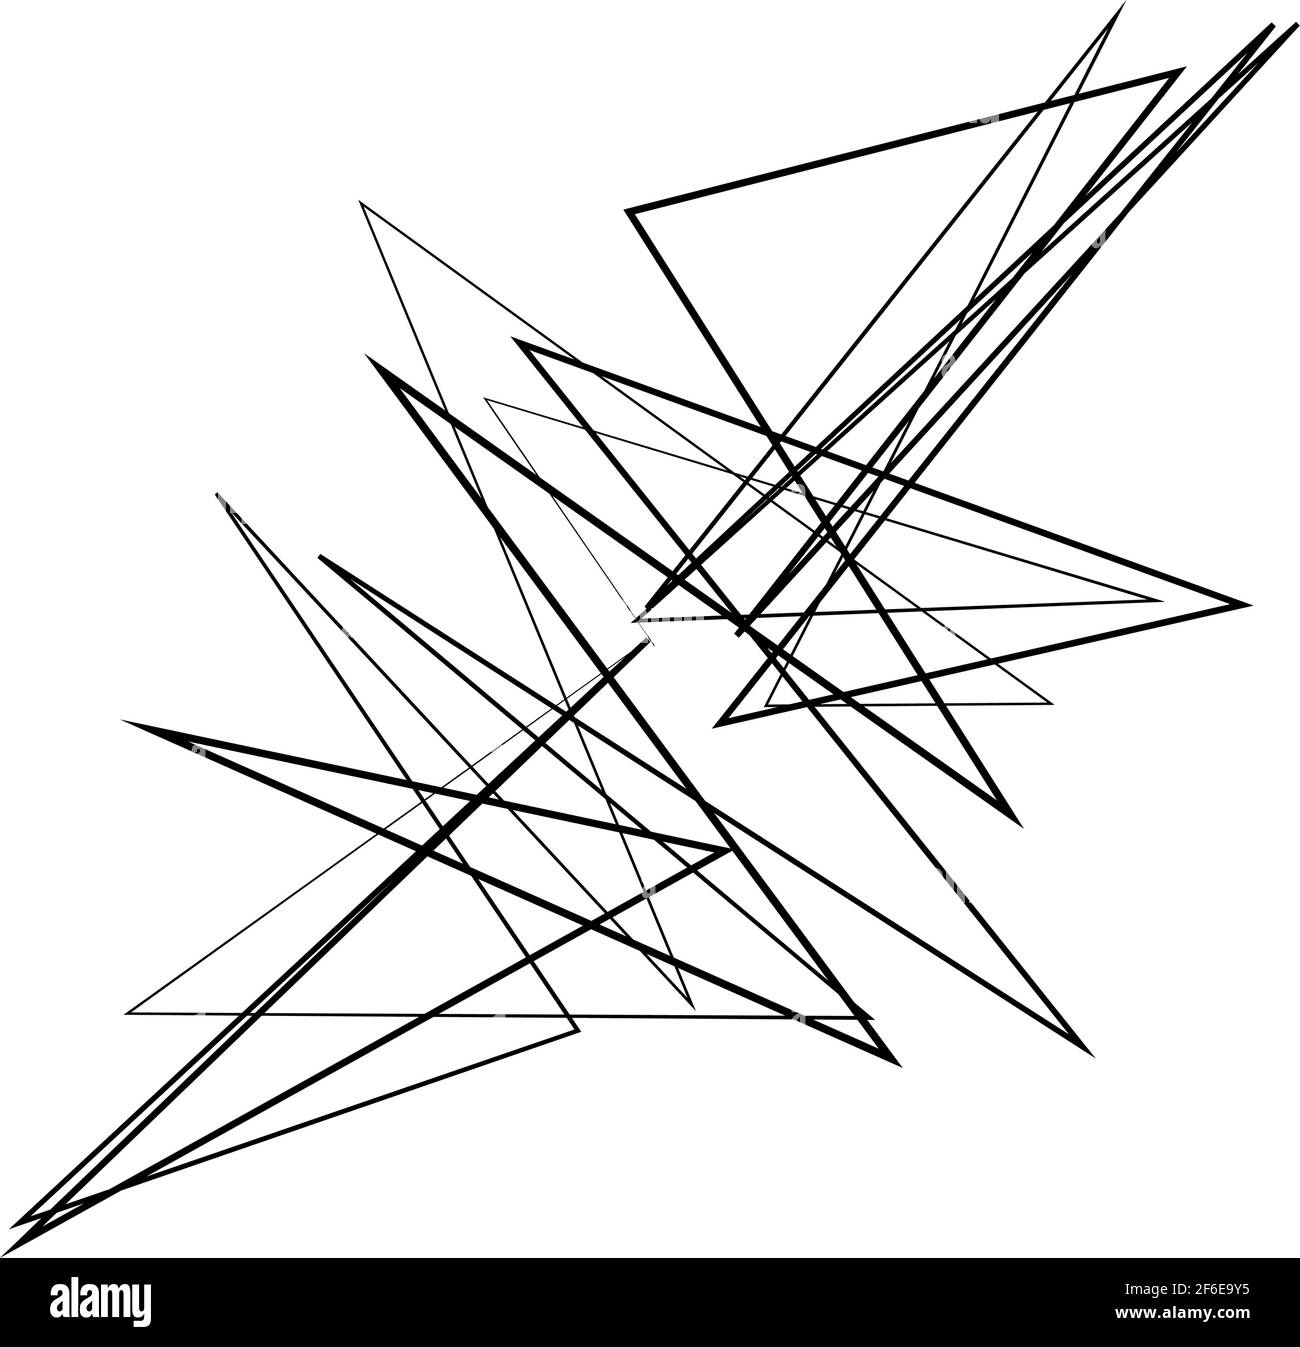 Abstract edgy, geometric line art. Angular random, chaotic lines